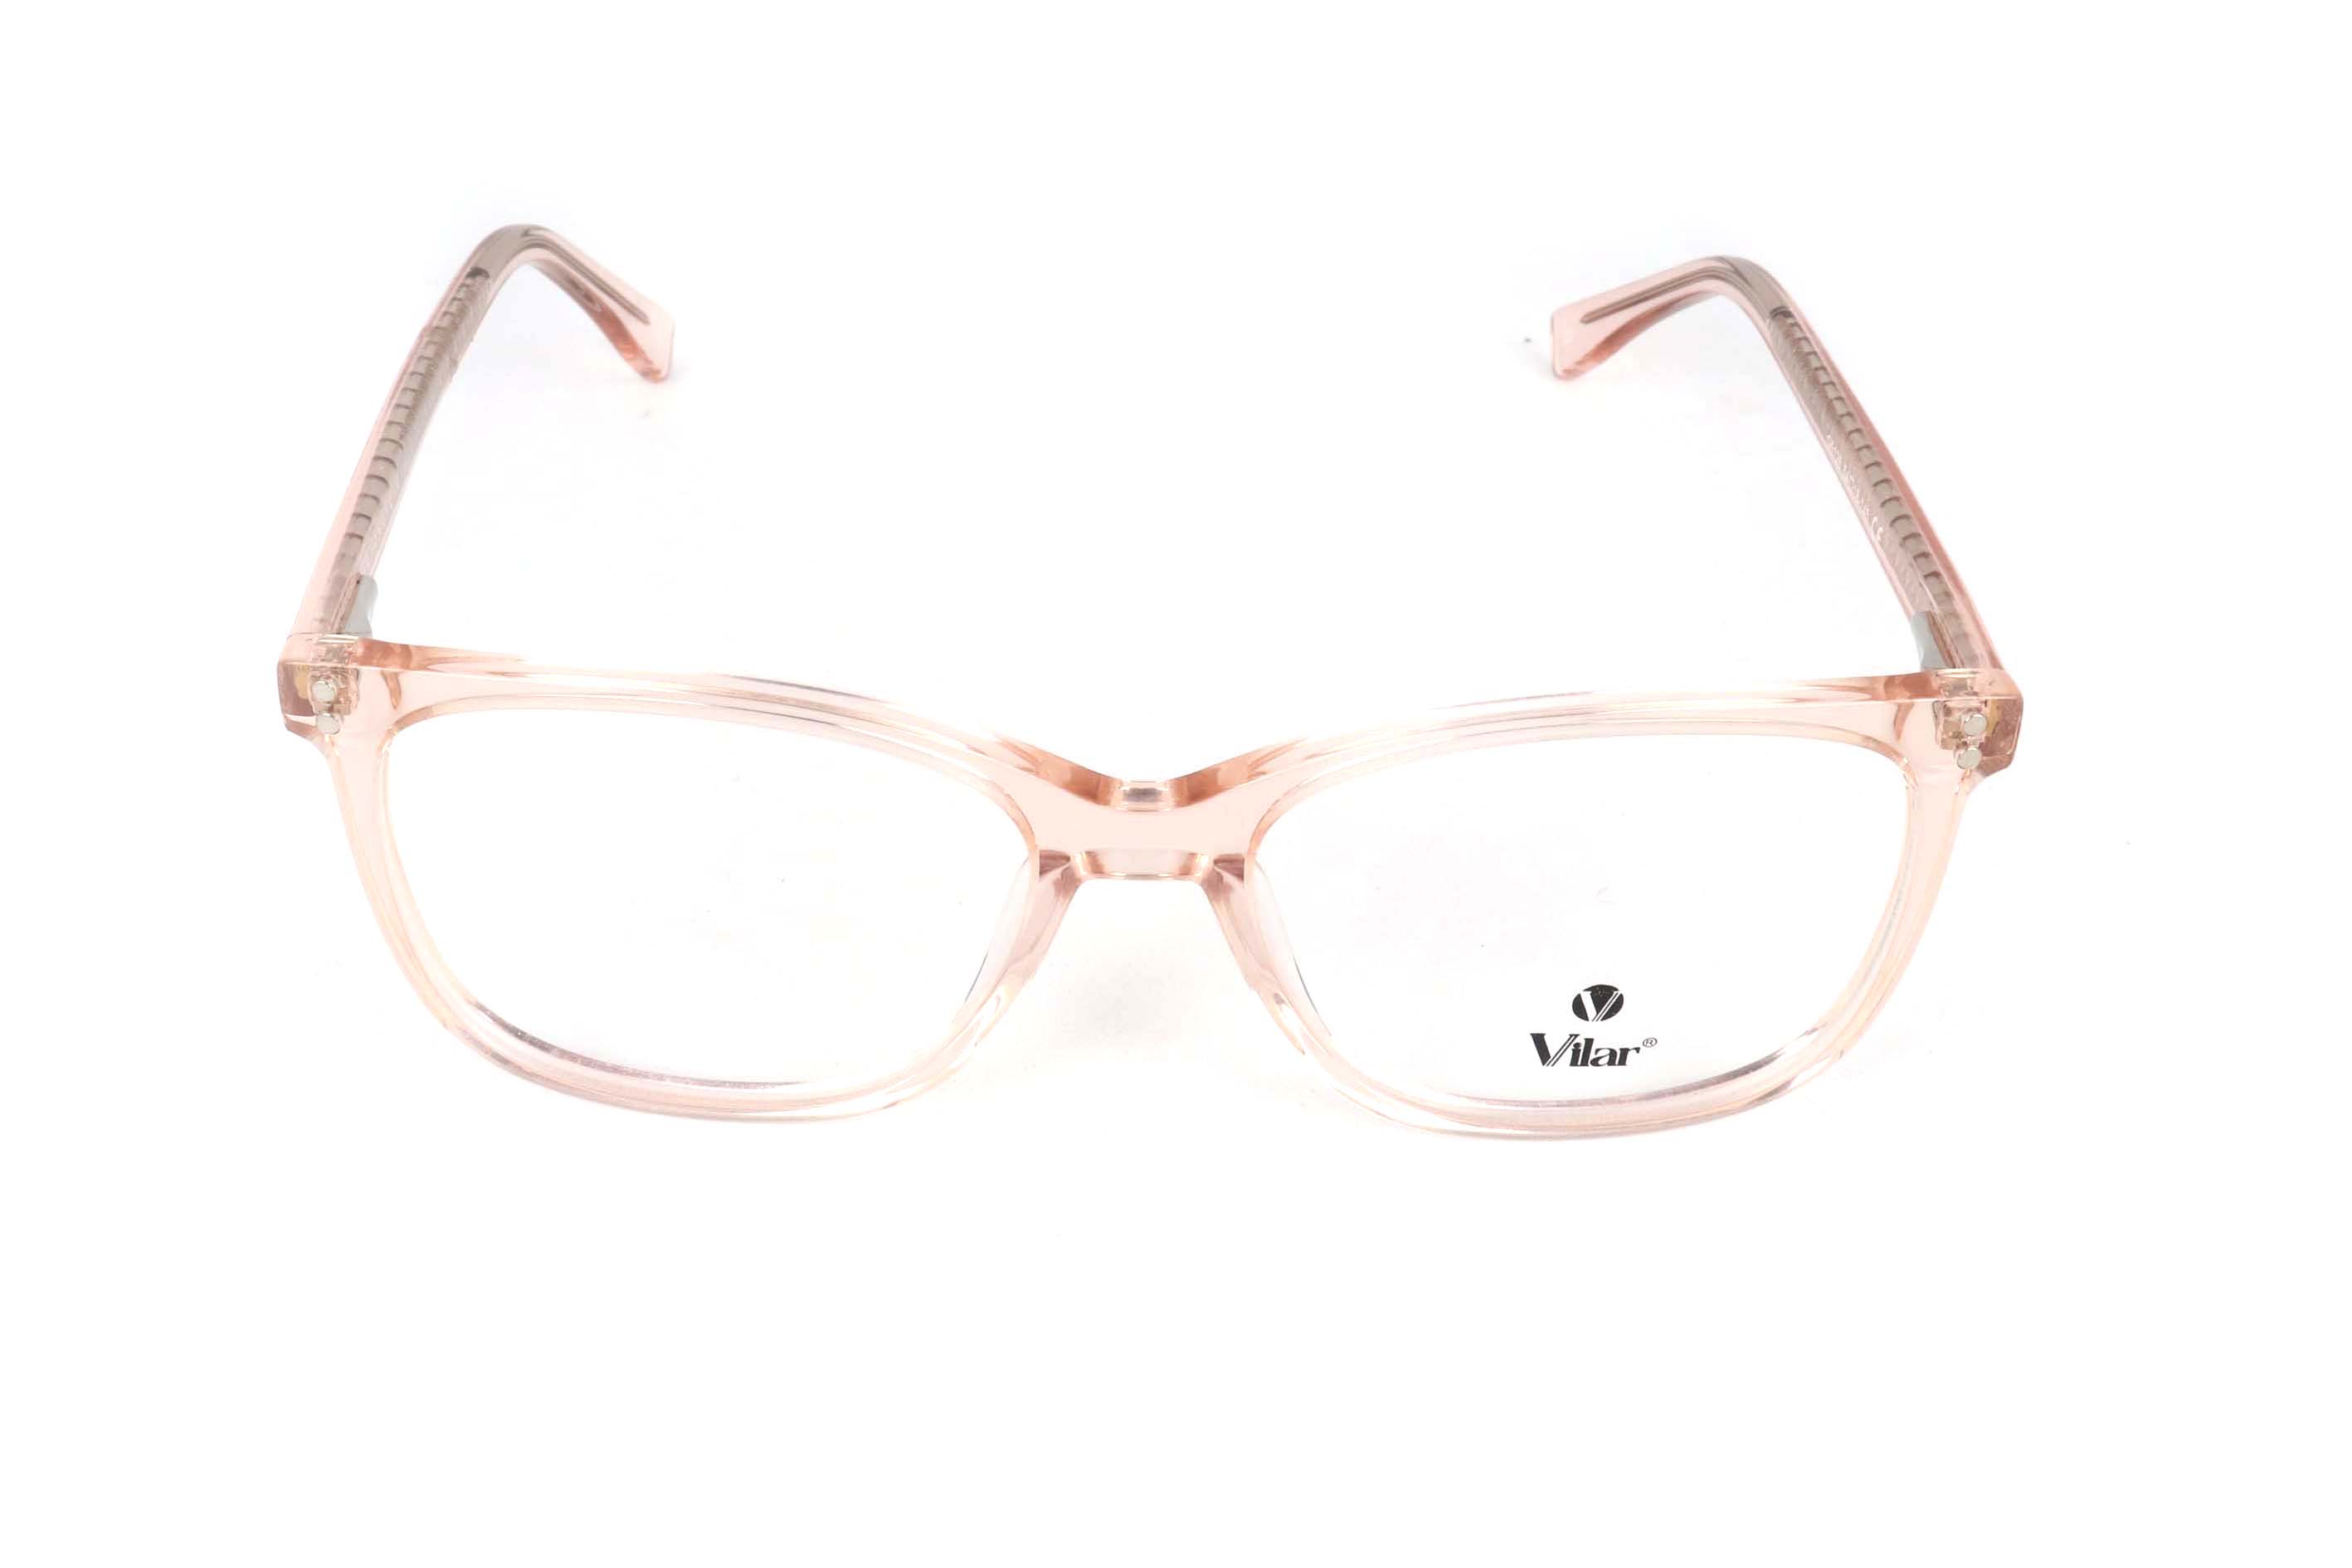 Vilar Eyeglasses -G126-C3-54-18-145